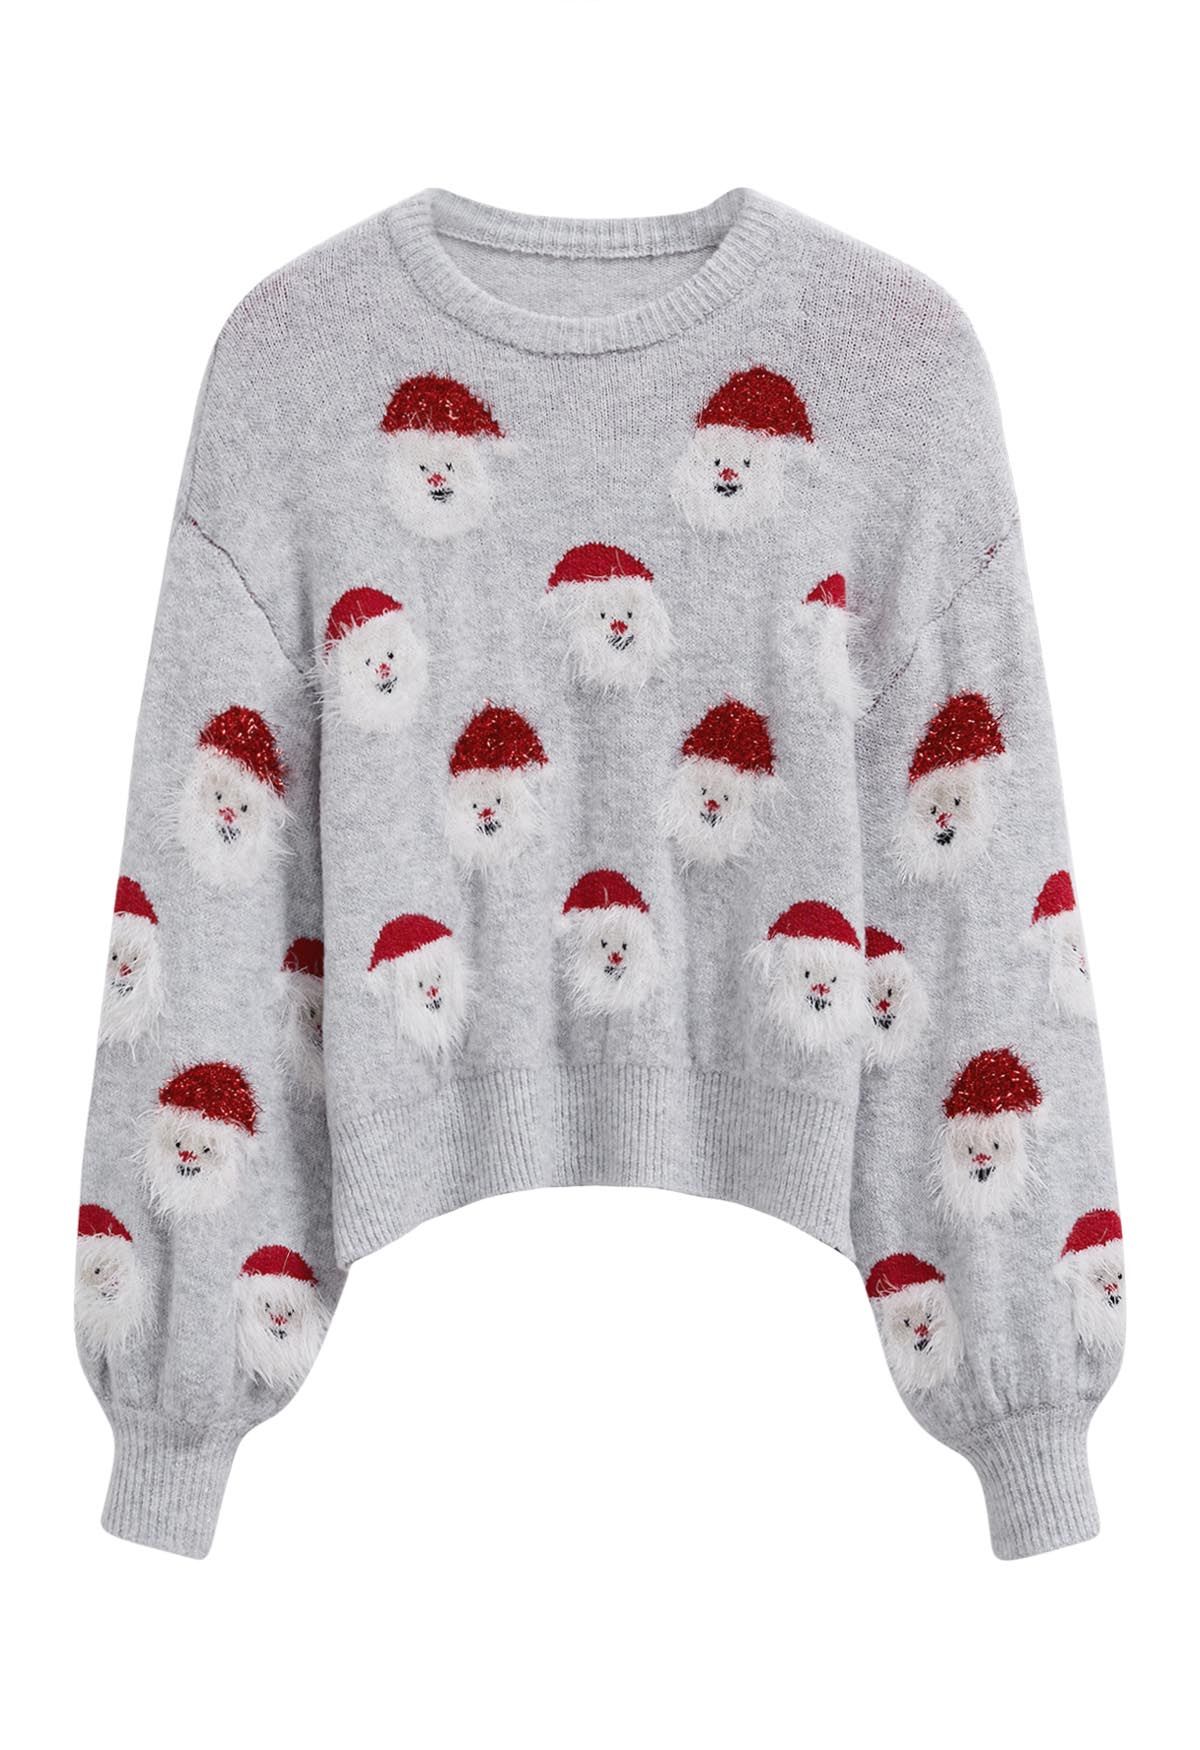 Fuzzy Santa Claus Knit Top in Grey